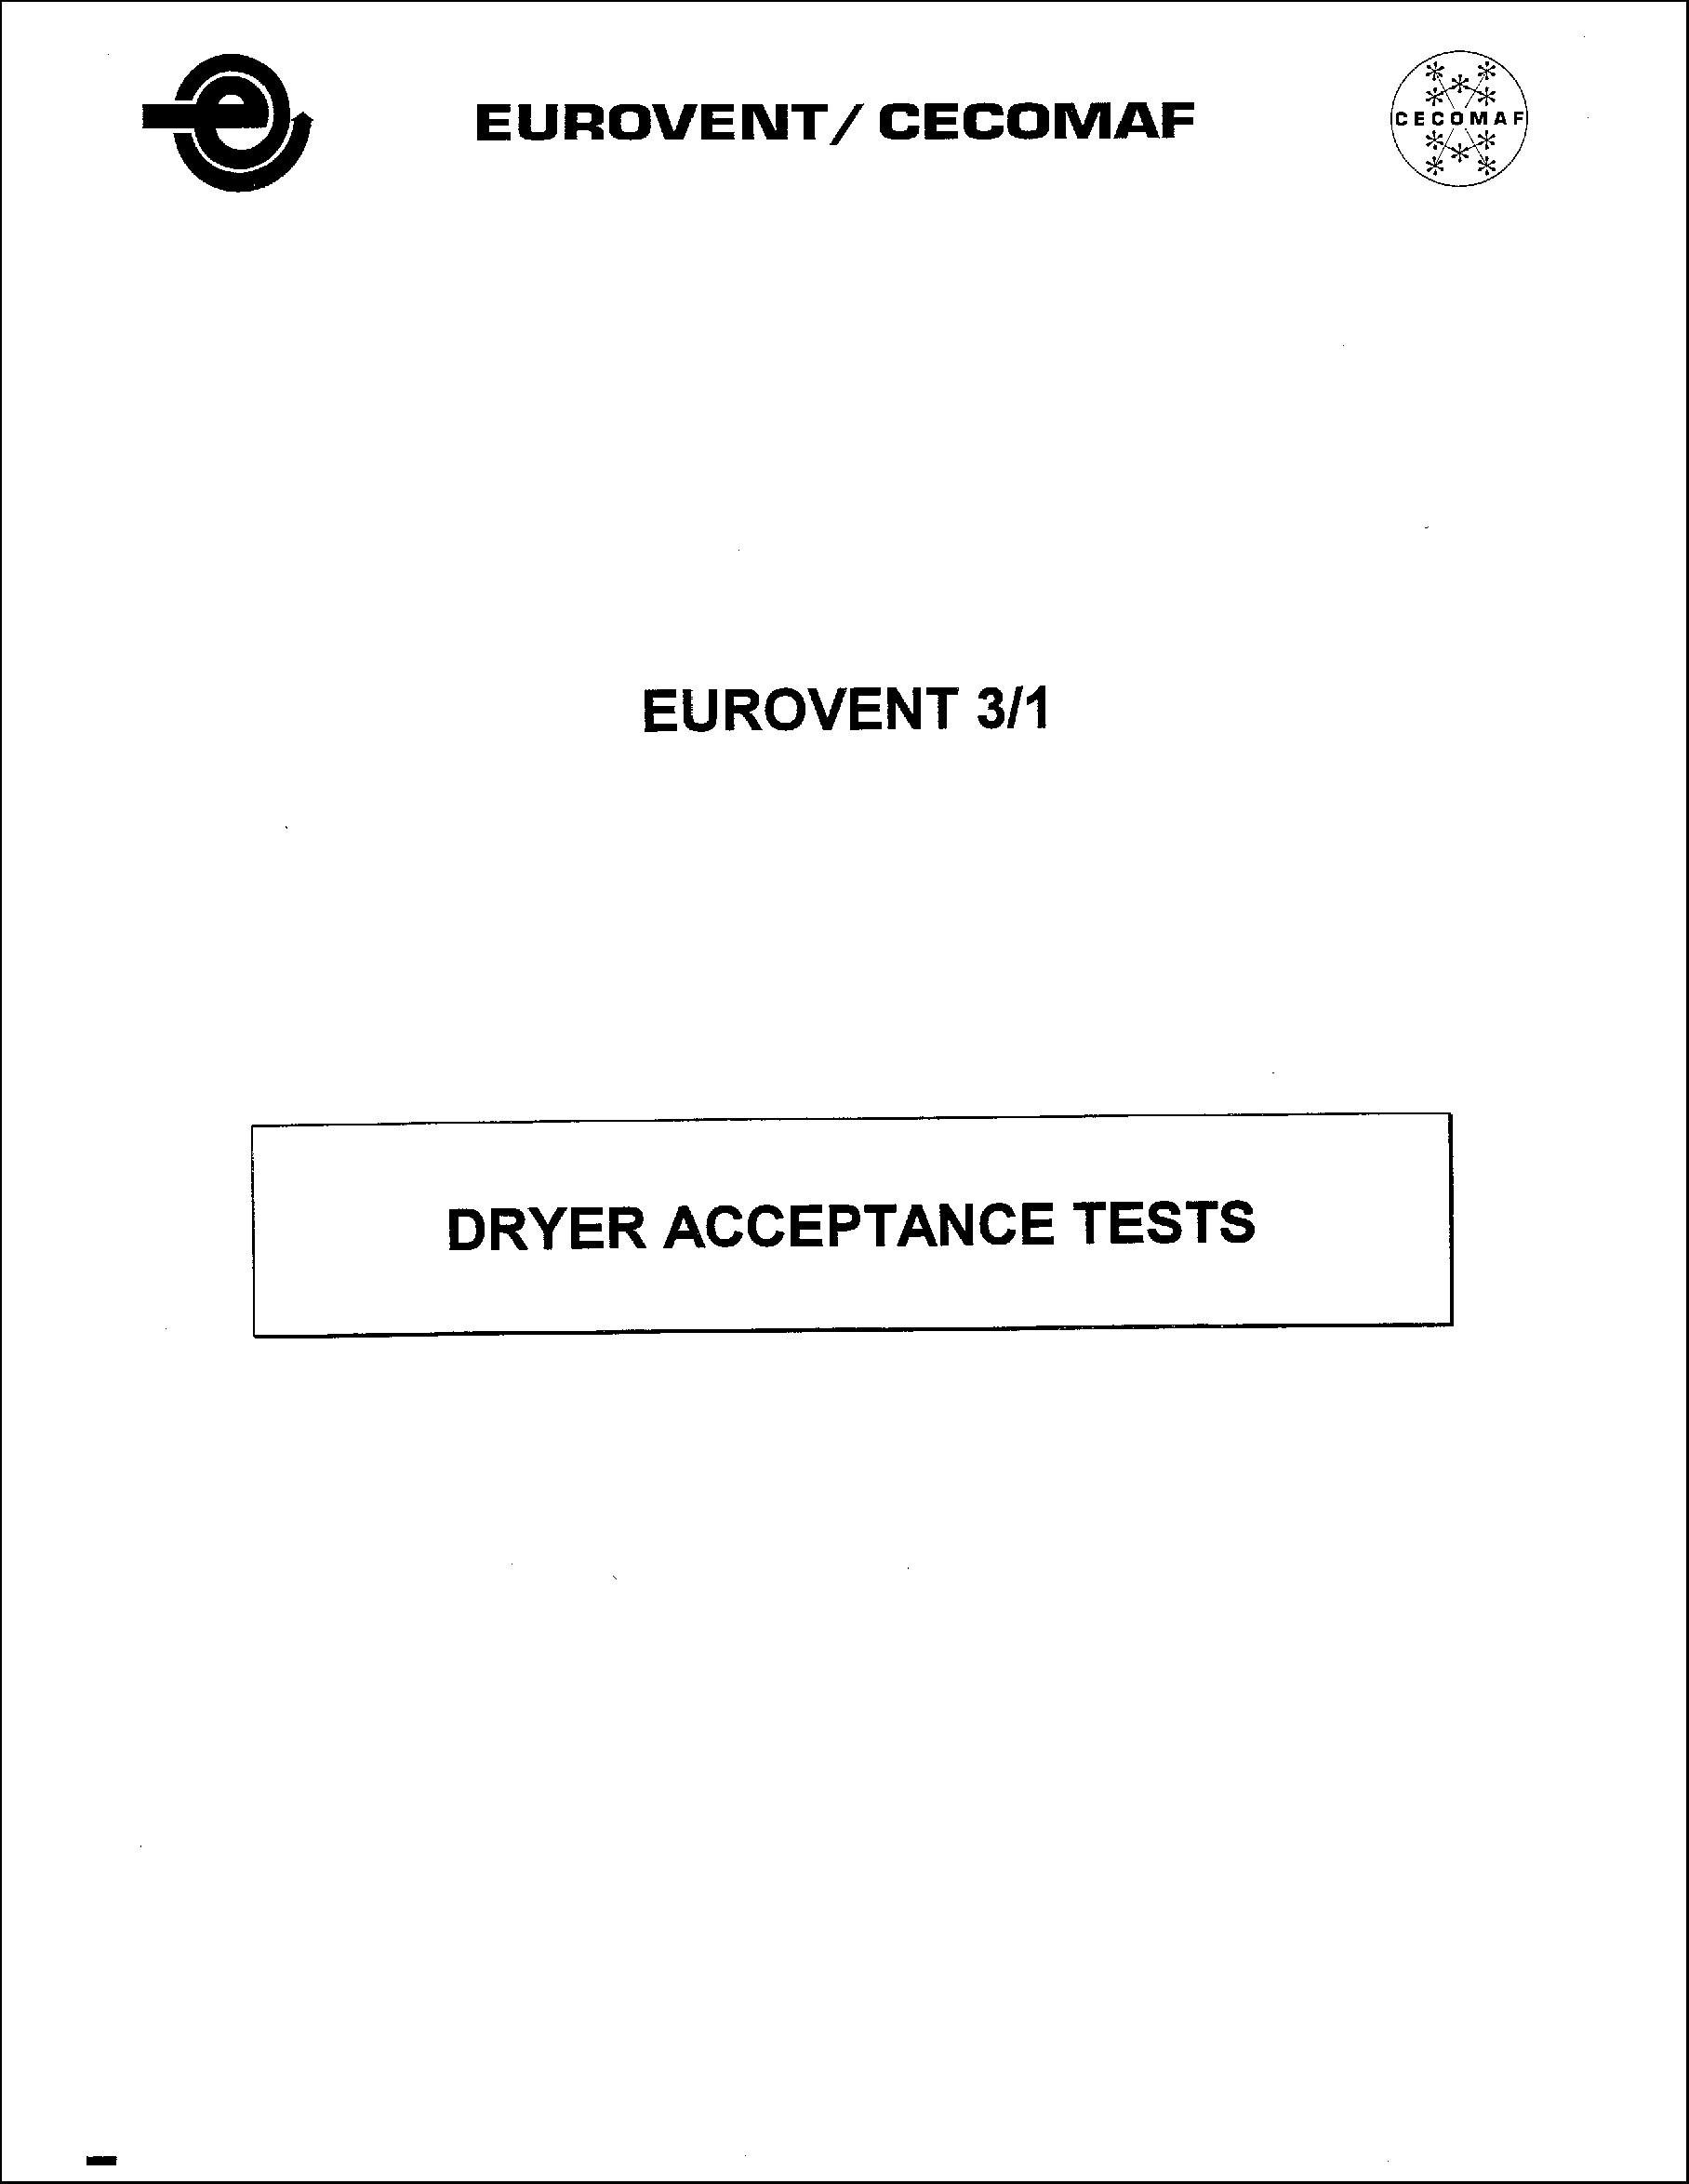 1984 - Dryer acceptance tests